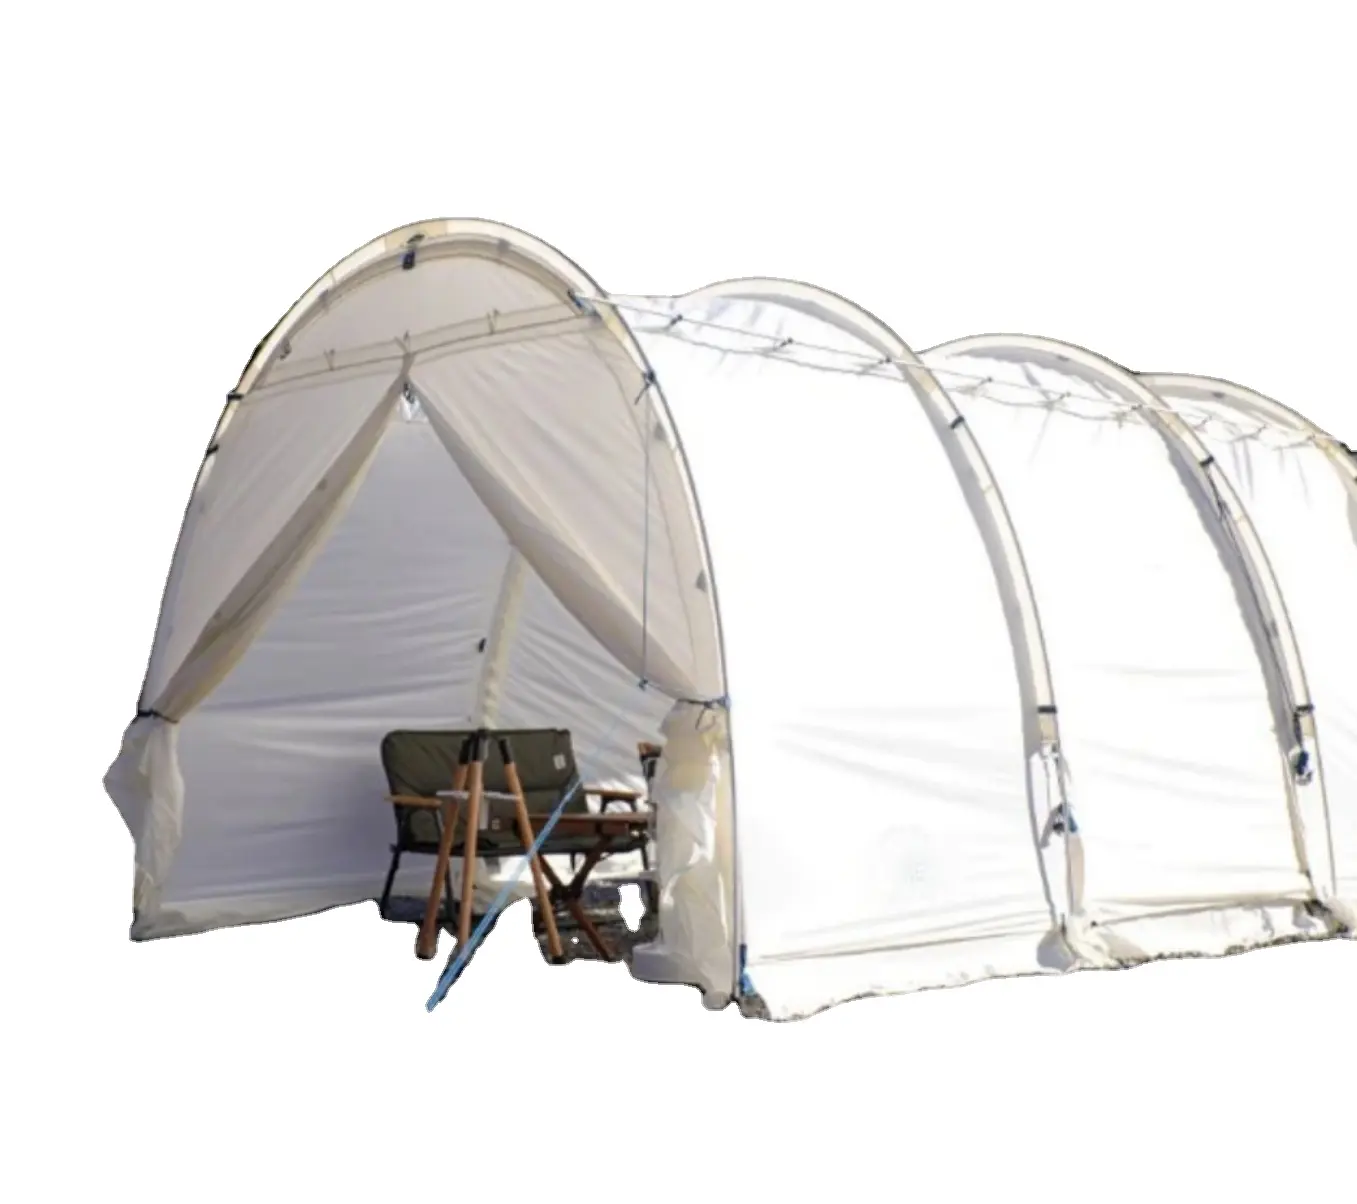 Tente grand tube de taille personnalisée camping en plein air grande tente tunnel tente de fête en plein air